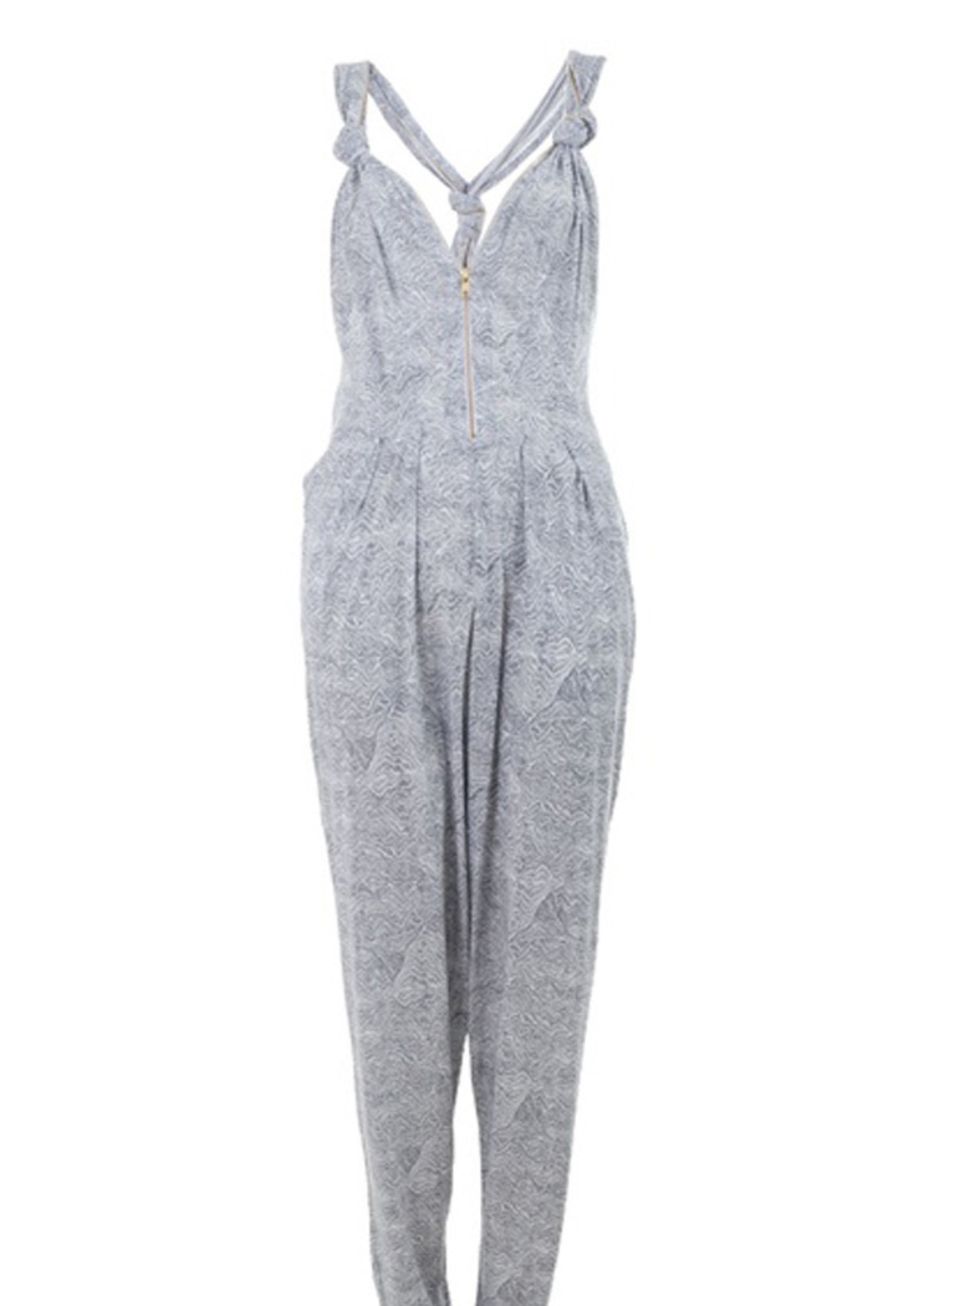 <p>Patterned jumpsuit, £234, by Stine Goya at <a href="http://www.farfetch.com/shopping/women/search/schid-7374696e6520676f7961/items.aspx">Farfetch</a> </p>